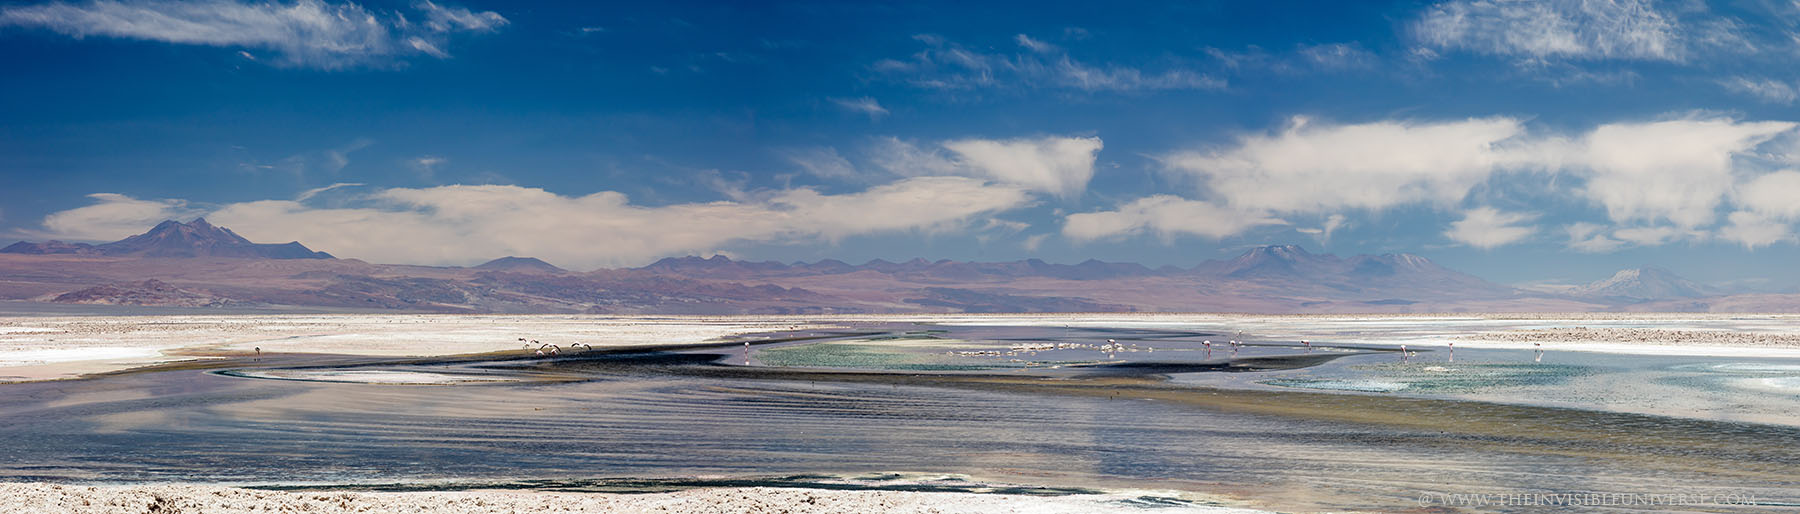 Chile_Altiplano_Atacama_080.jpg